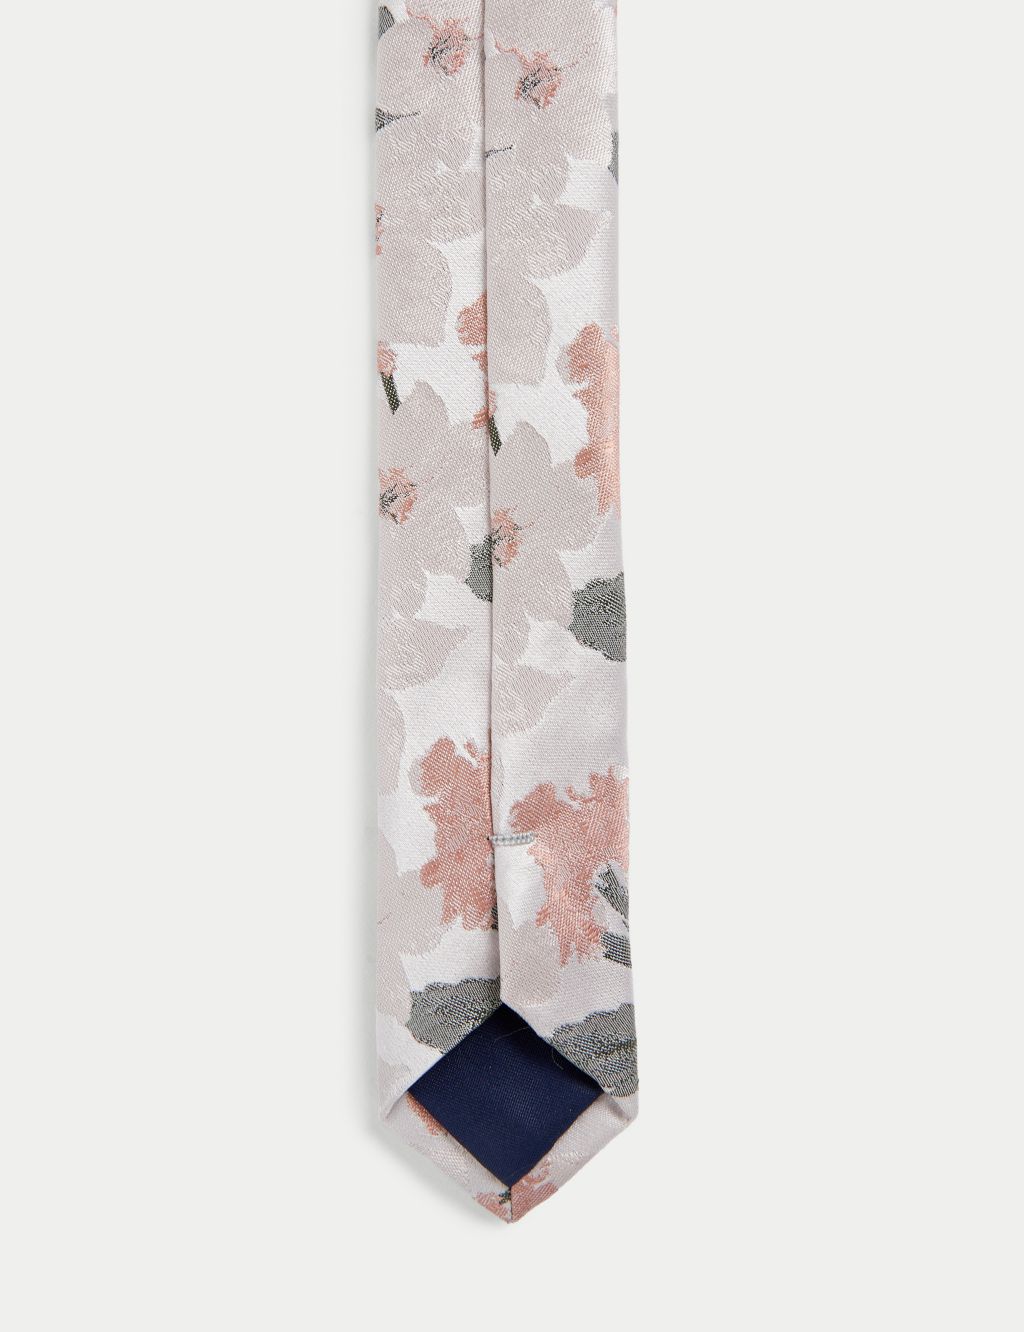 Printed Floral Pure Silk Tie image 2